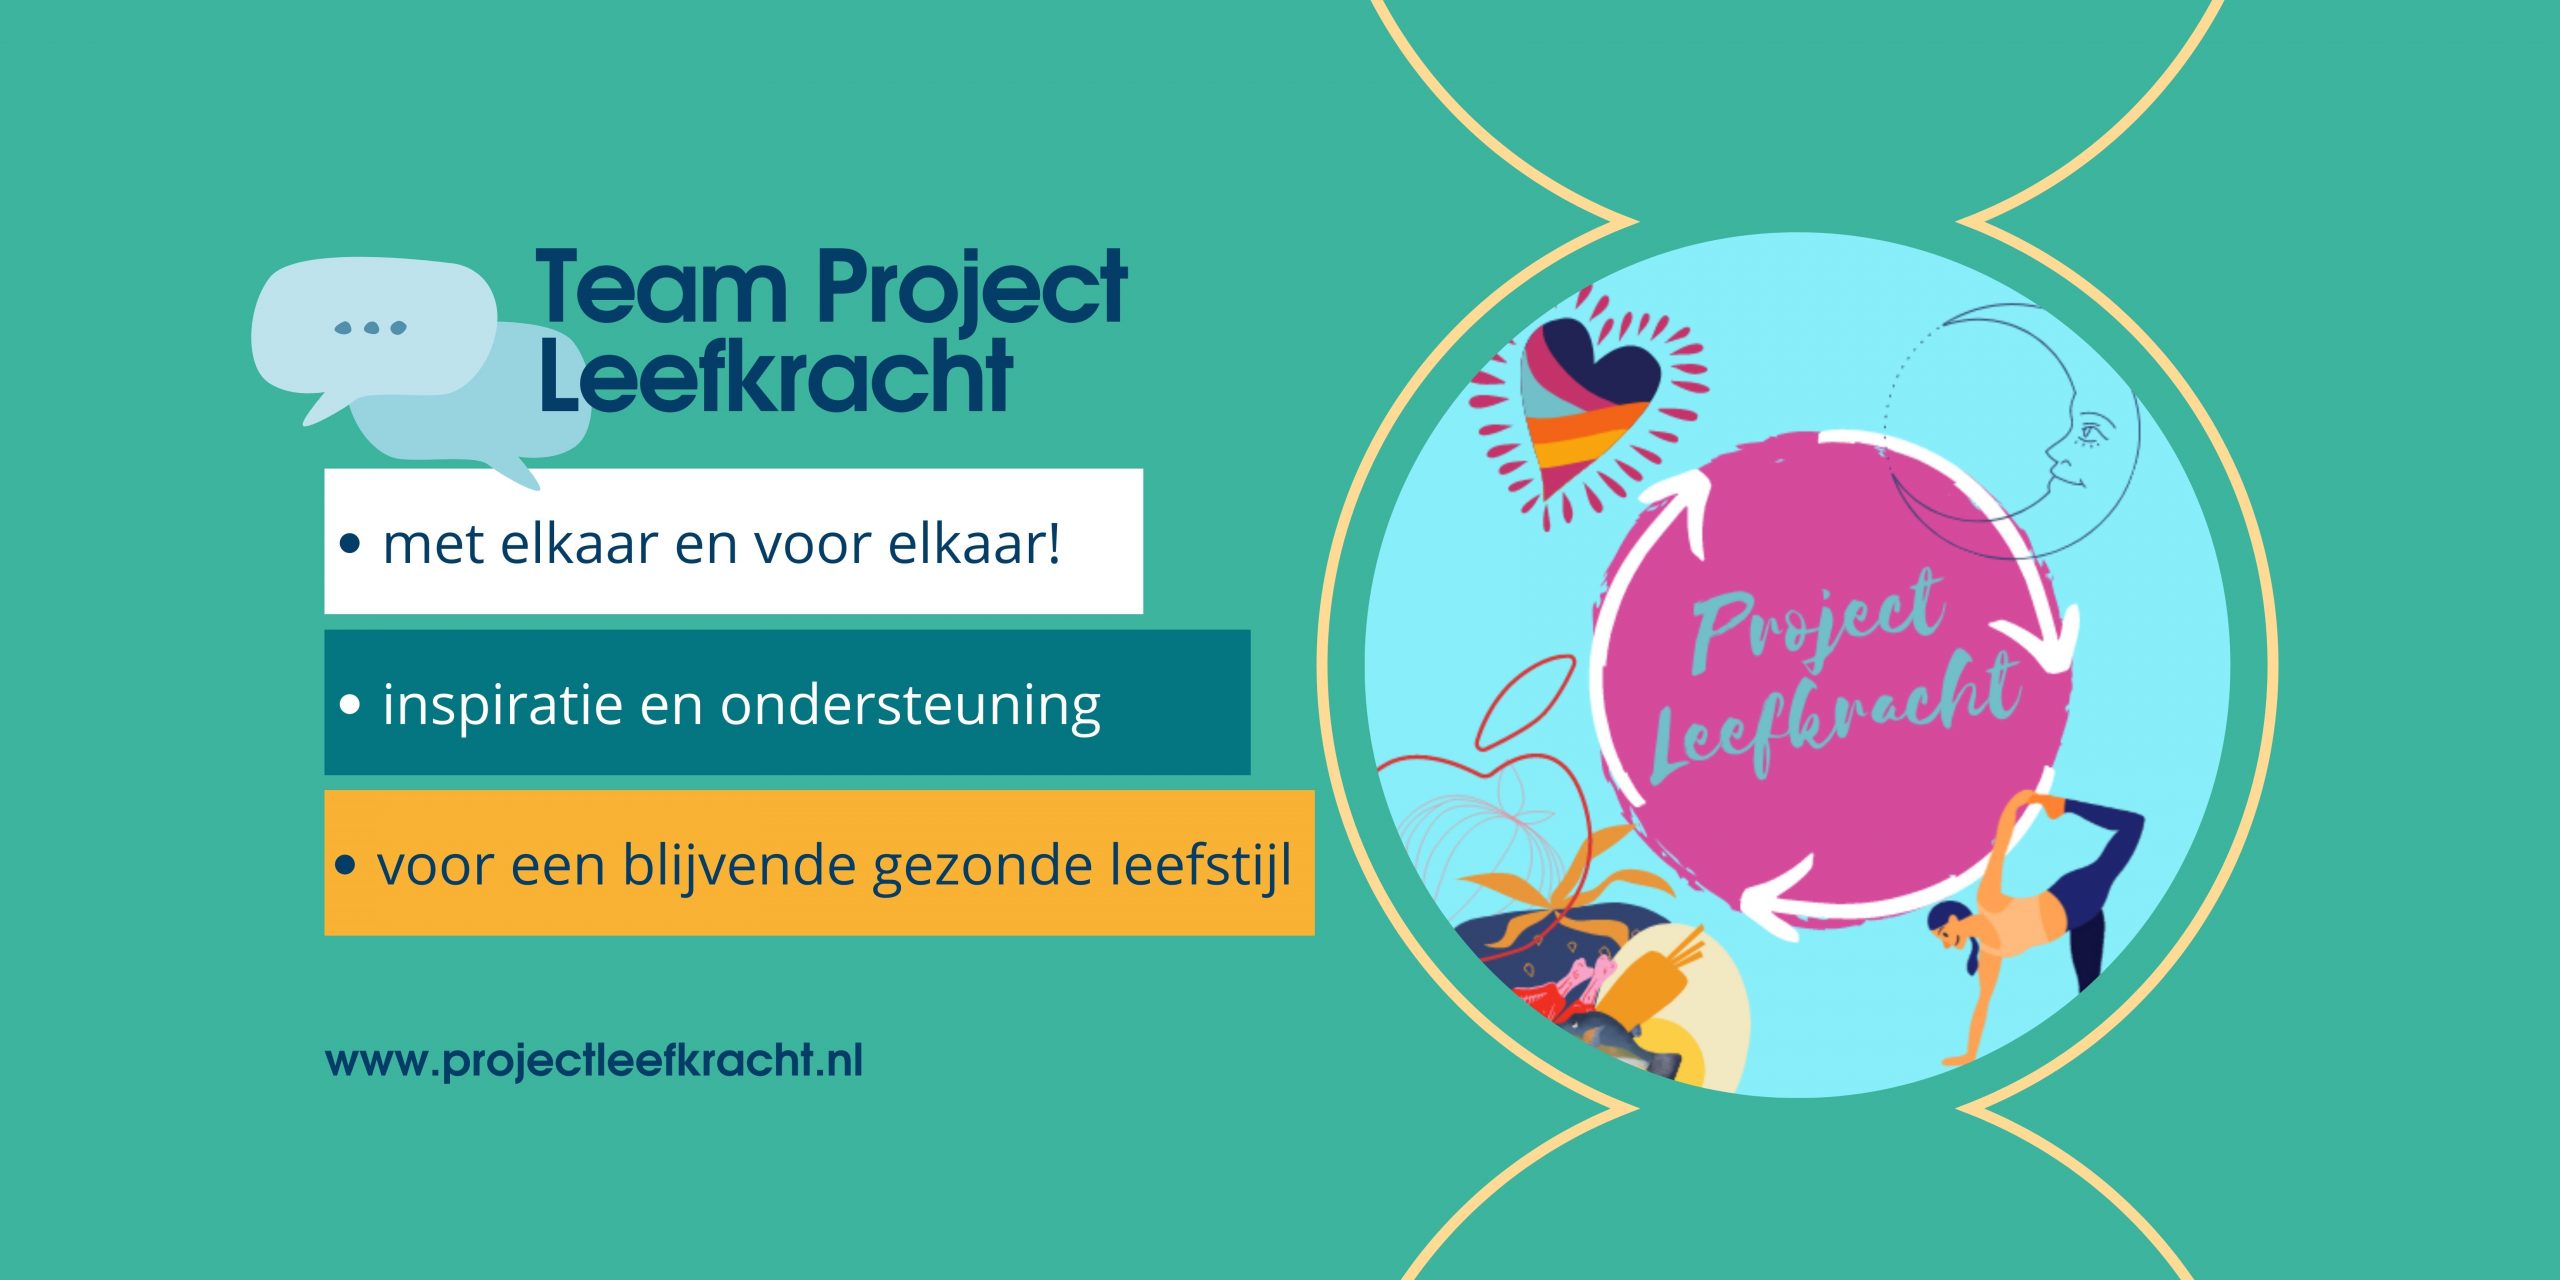 facebookgroep Team Project Leefkracht